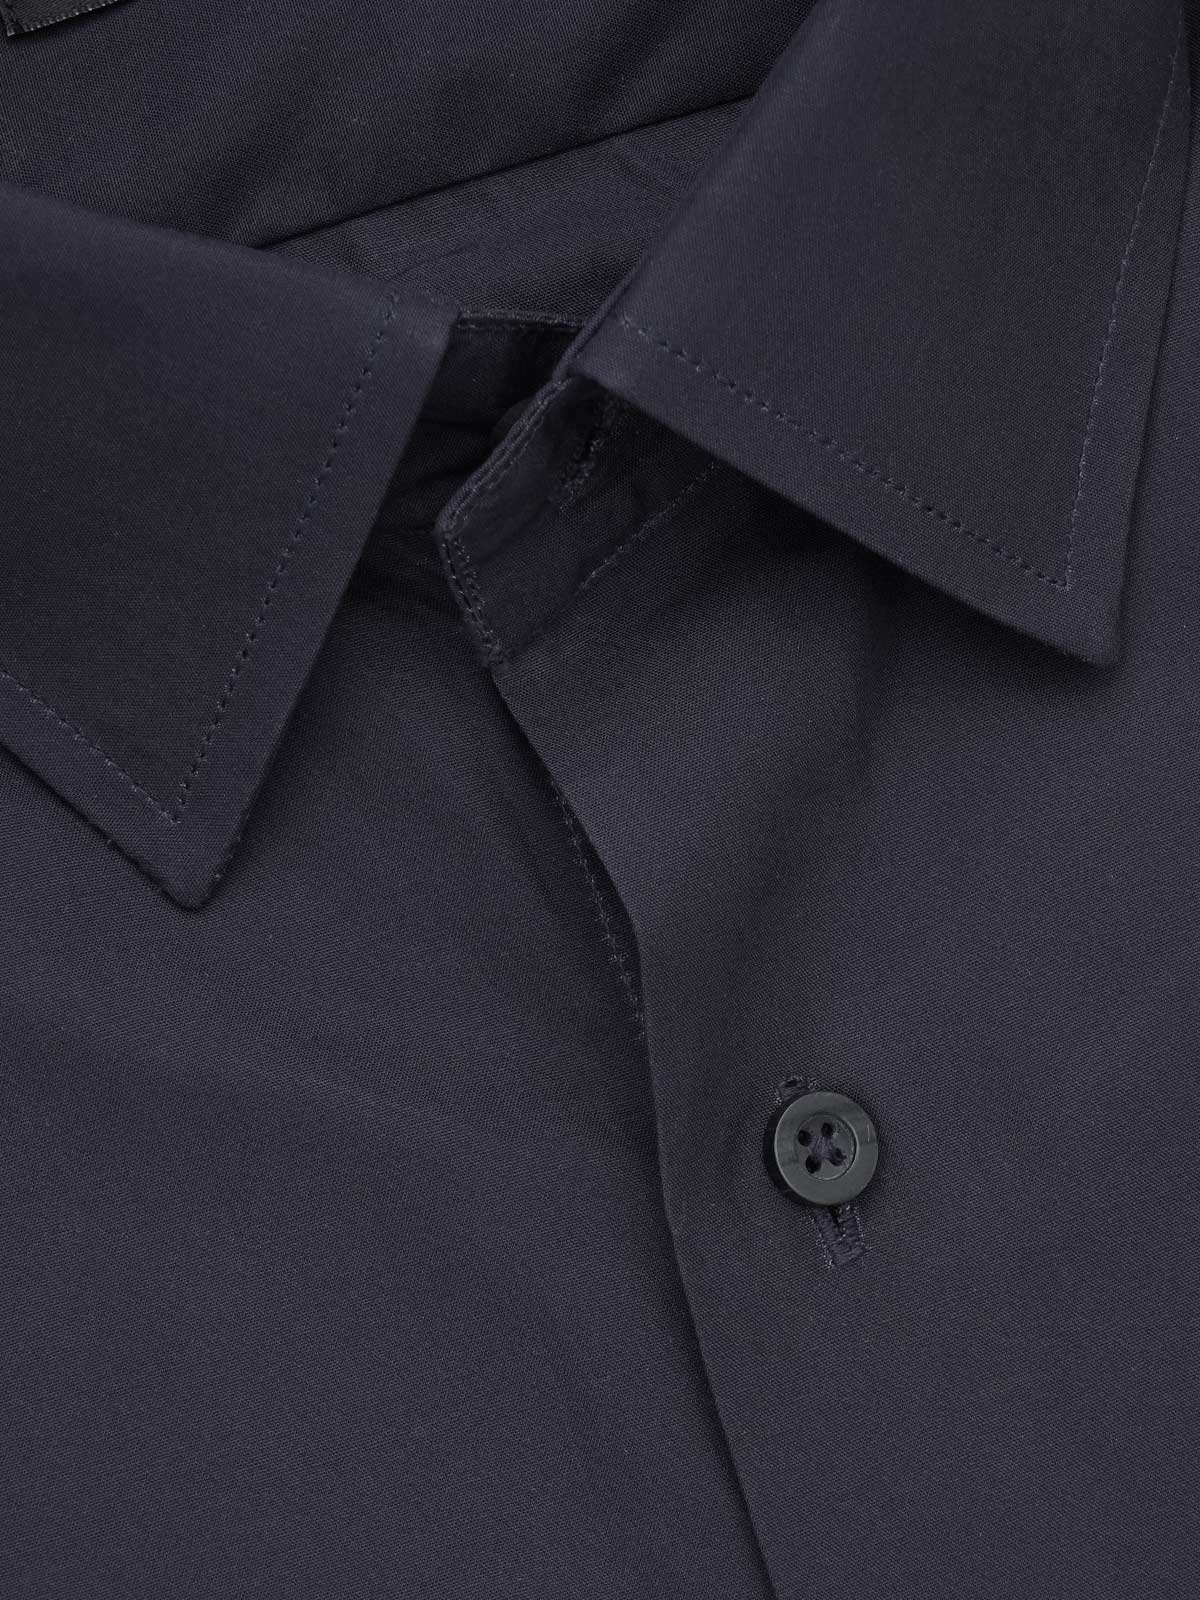 Navy Blue Plain, Elite Edition, French Collar Men’s Formal Shirt (FS-691)